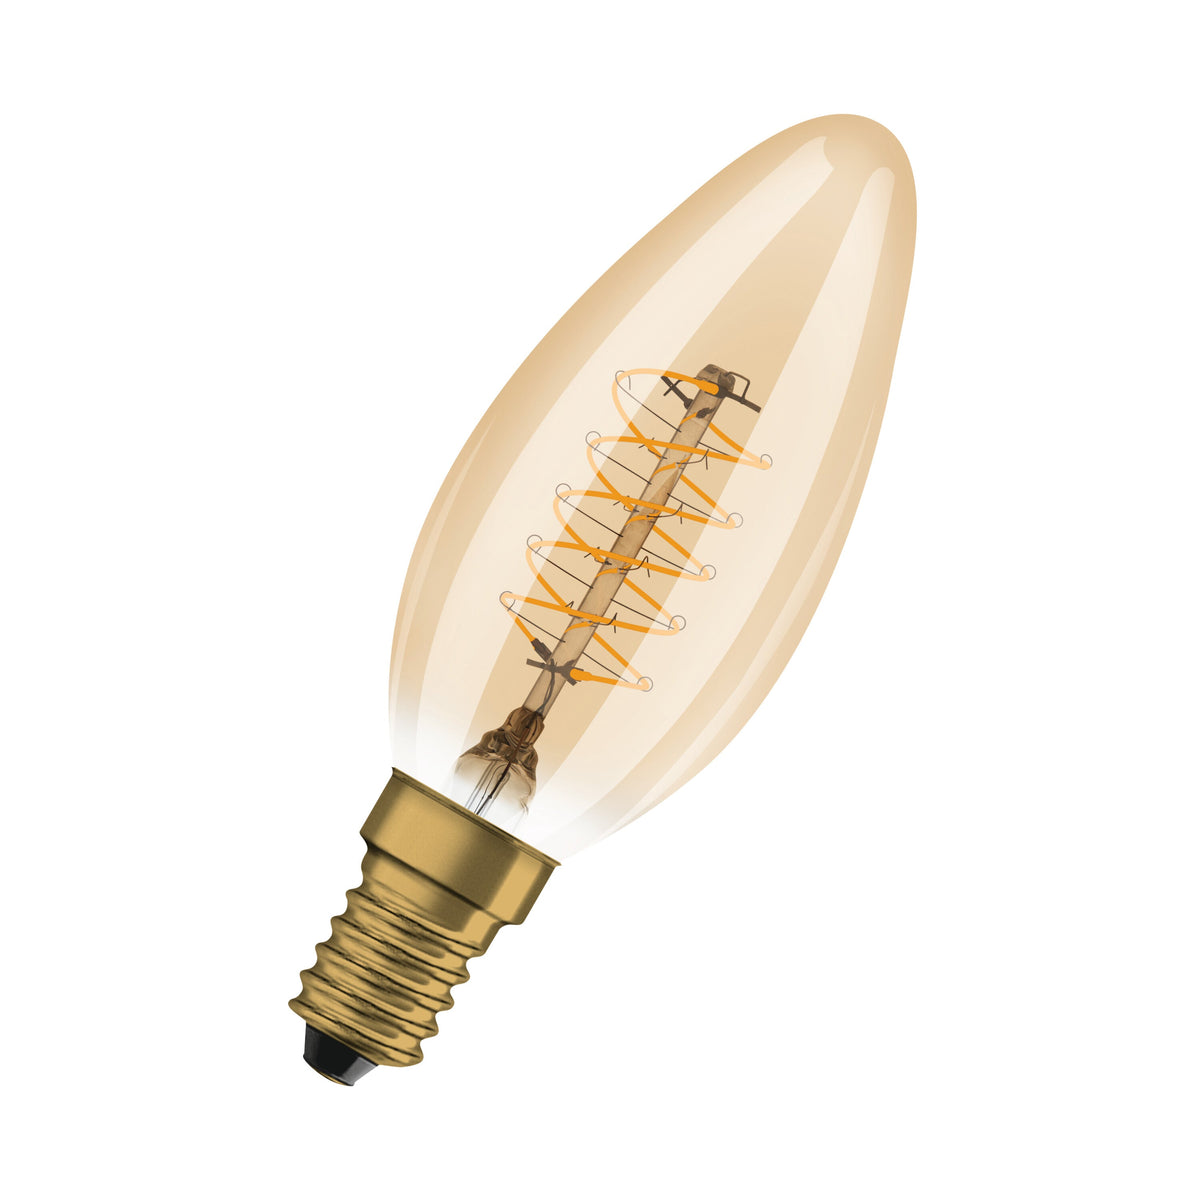 OSRAM Vintage 1906 LED-Lampe, Gold-Tönung, 3,4W, 250lm